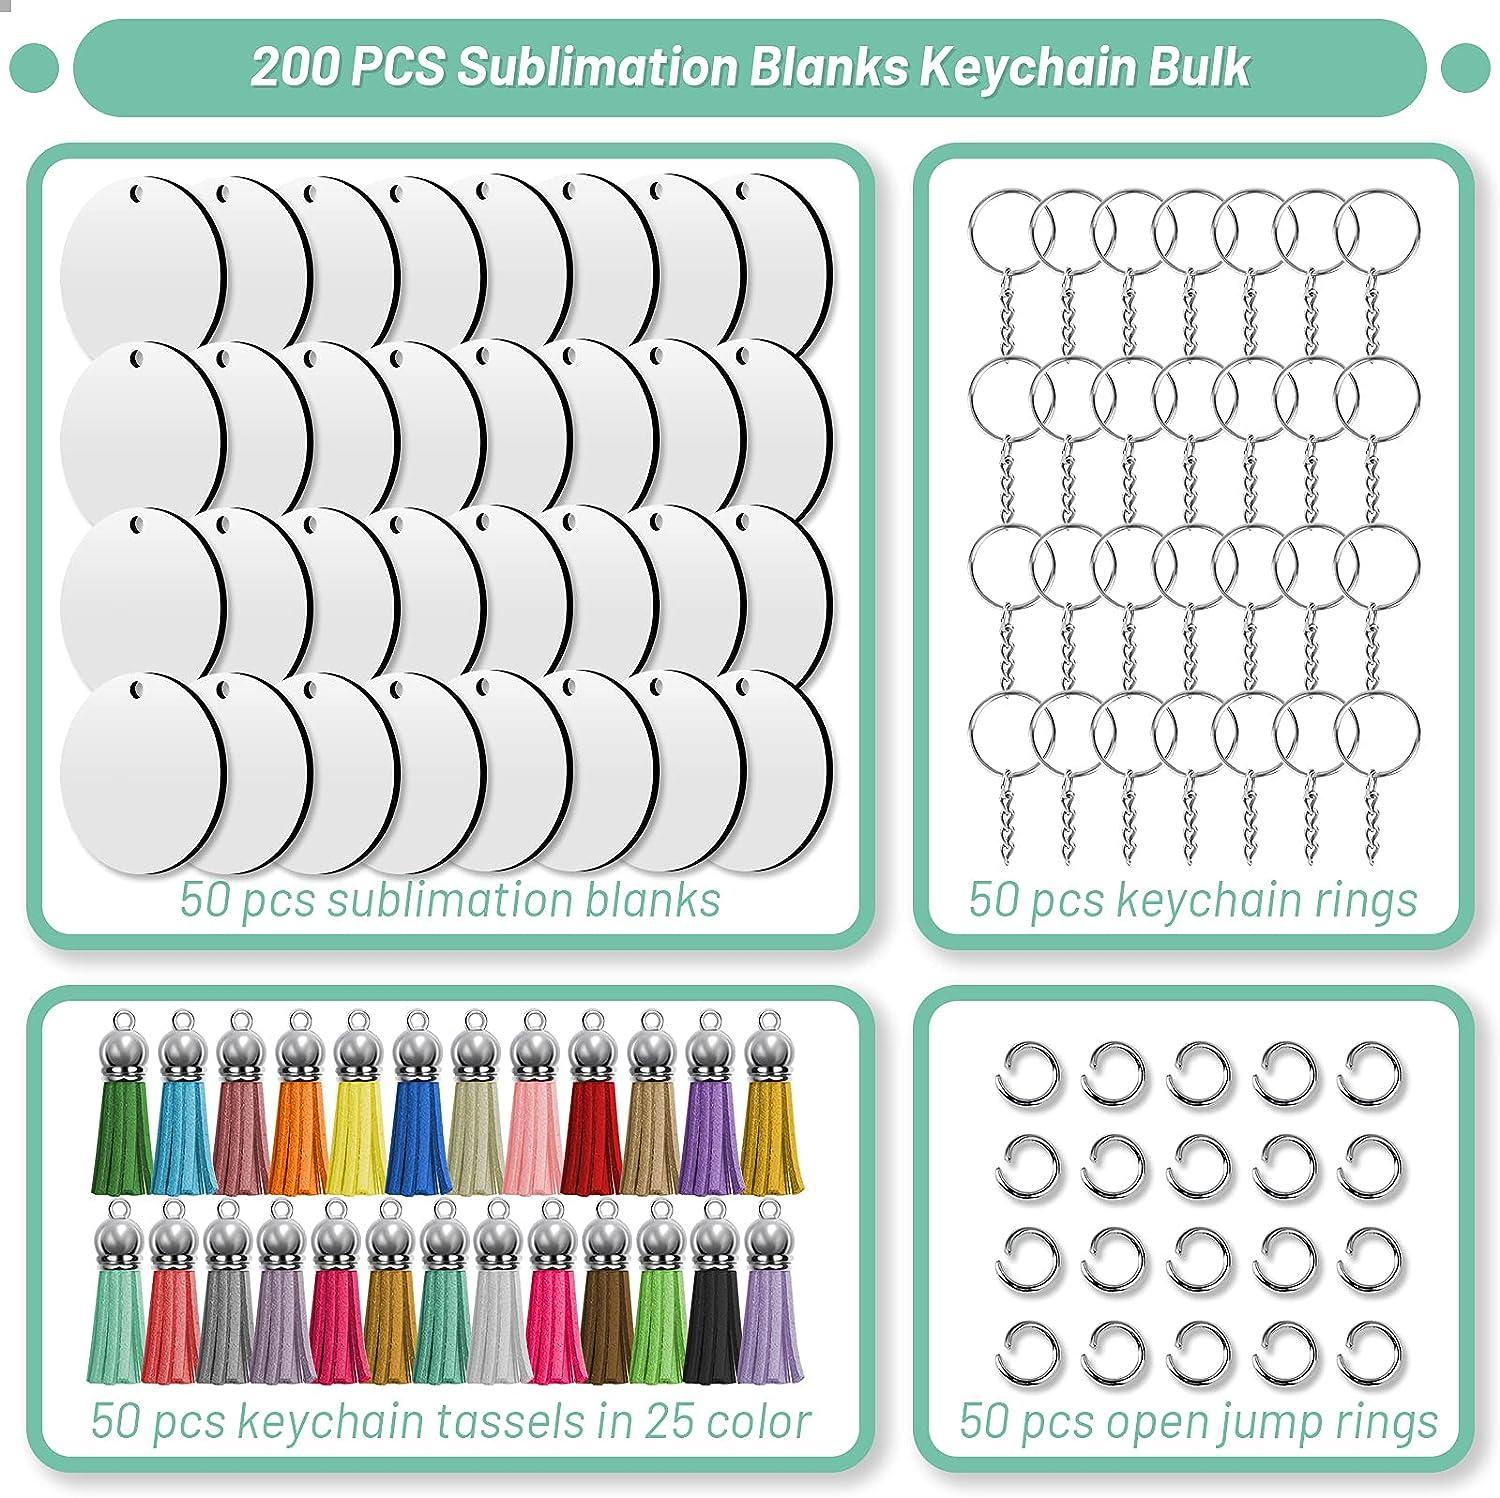 Sublimation Blanks Keychains Bulk, 200 PCS Keychains Ornament Tag